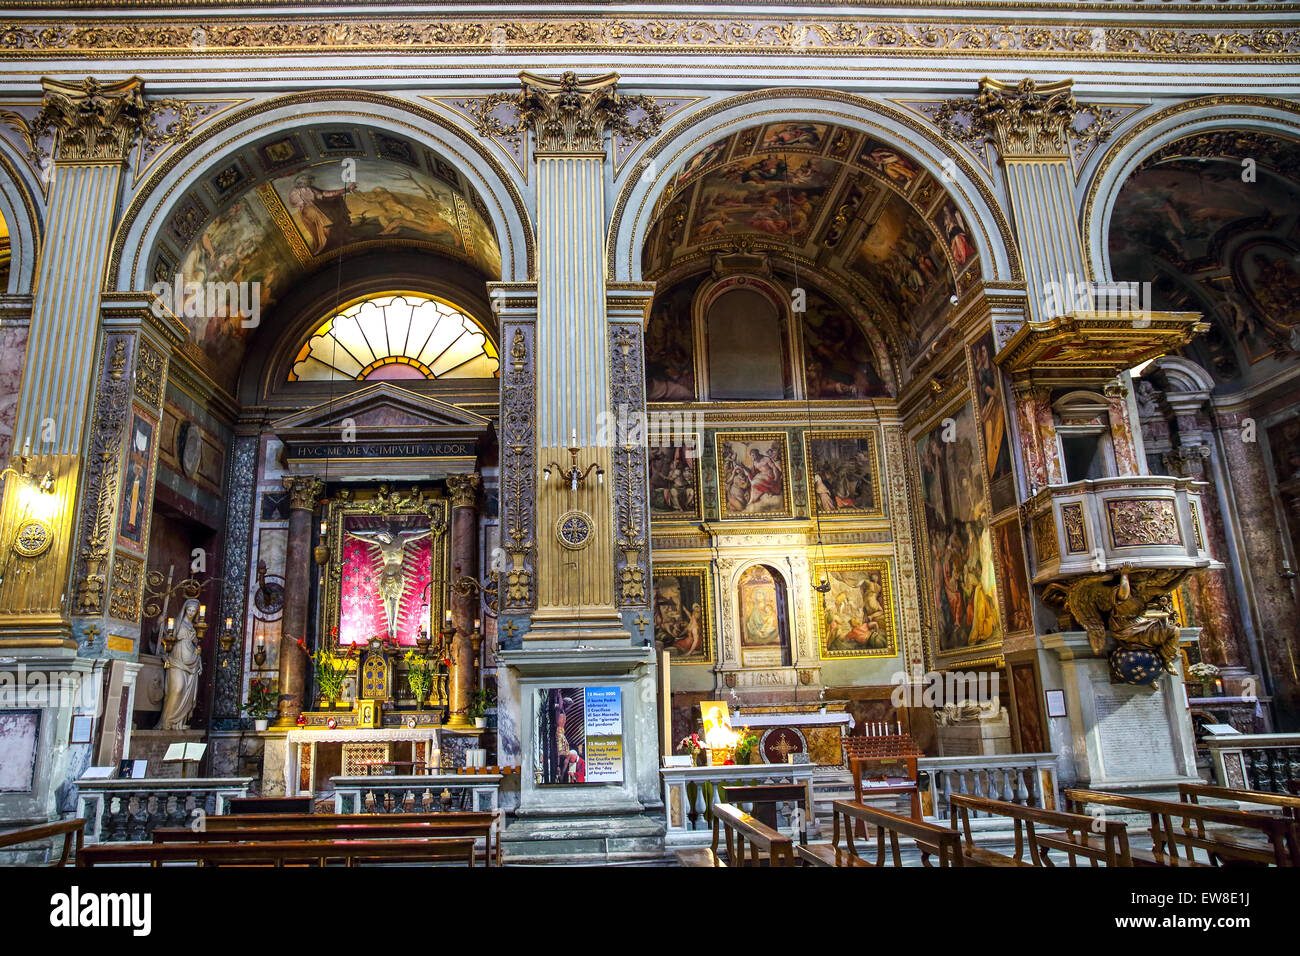 The presbytery in San Marcello al Corso church in Rome Stock Photo